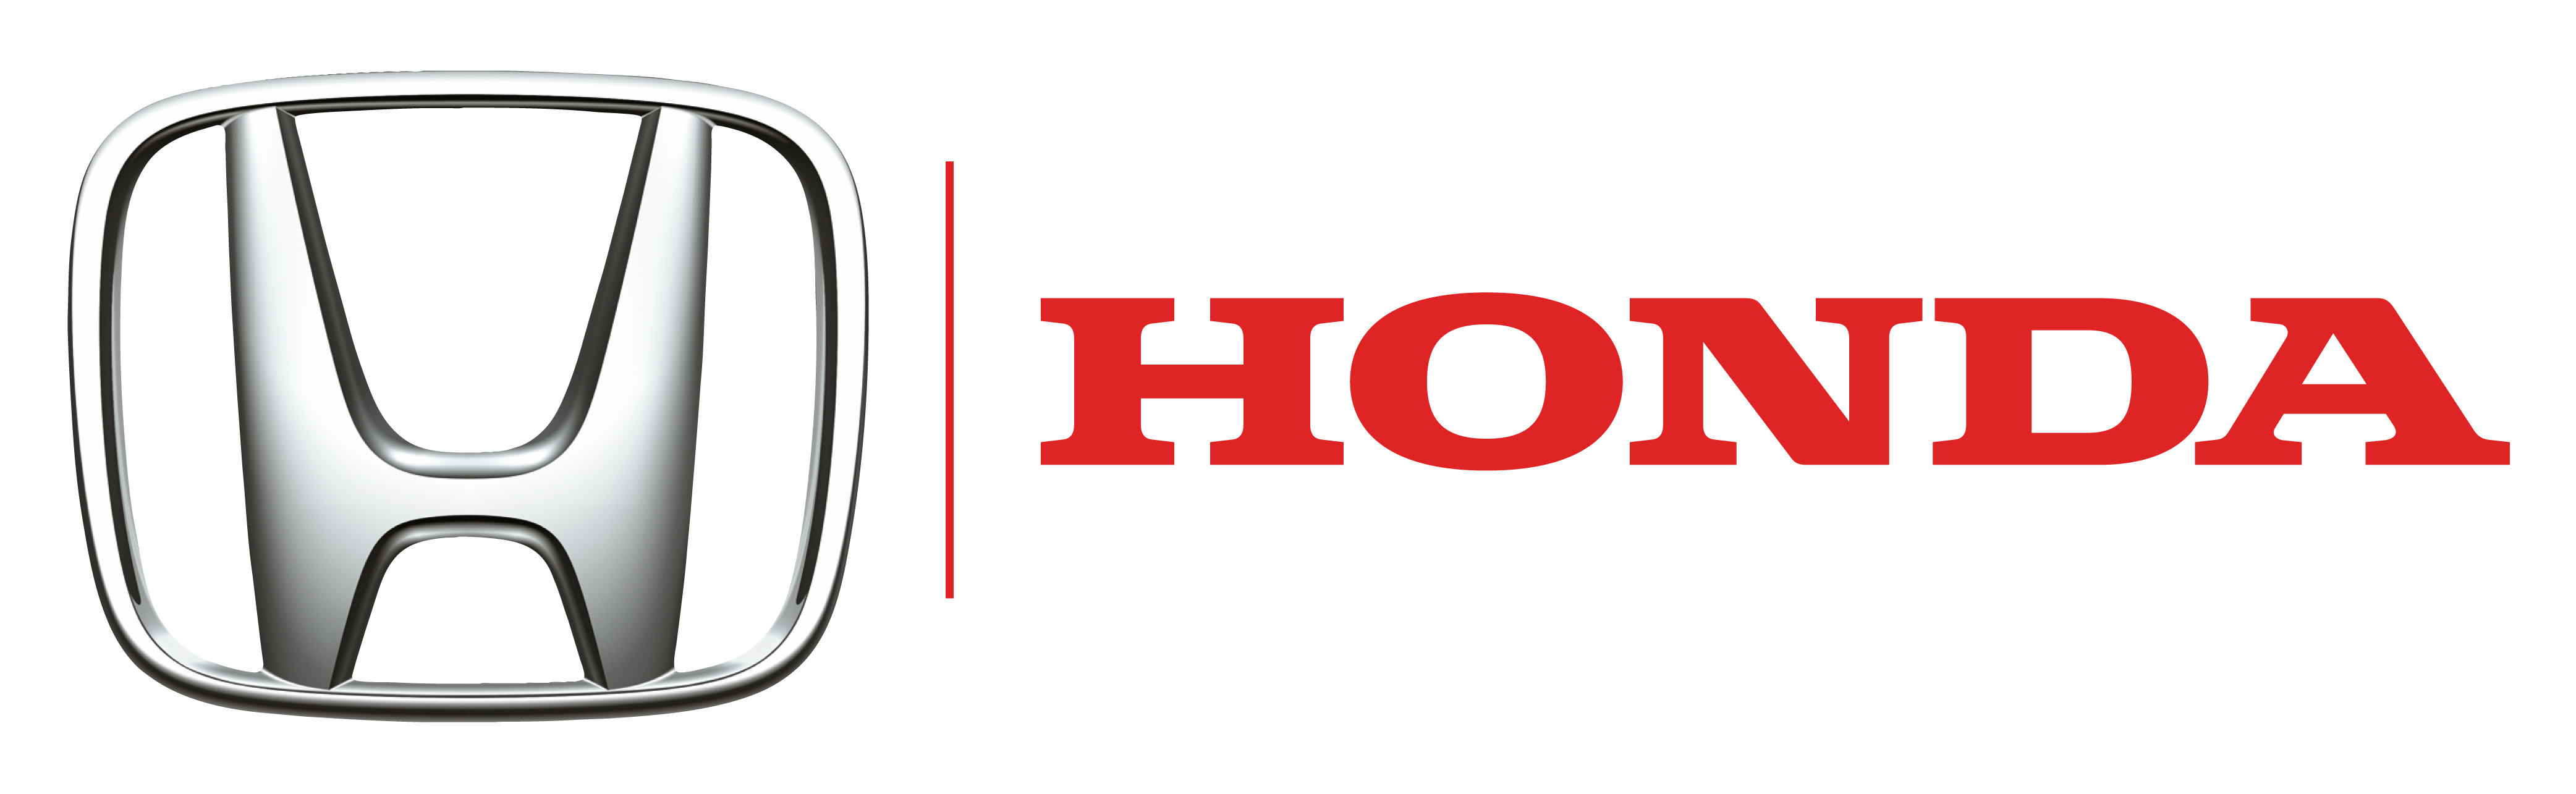 Что значит honda. Логотип Хонда. Хонда значок машины. Эмблема Honda logo. Хонда лого без фона.